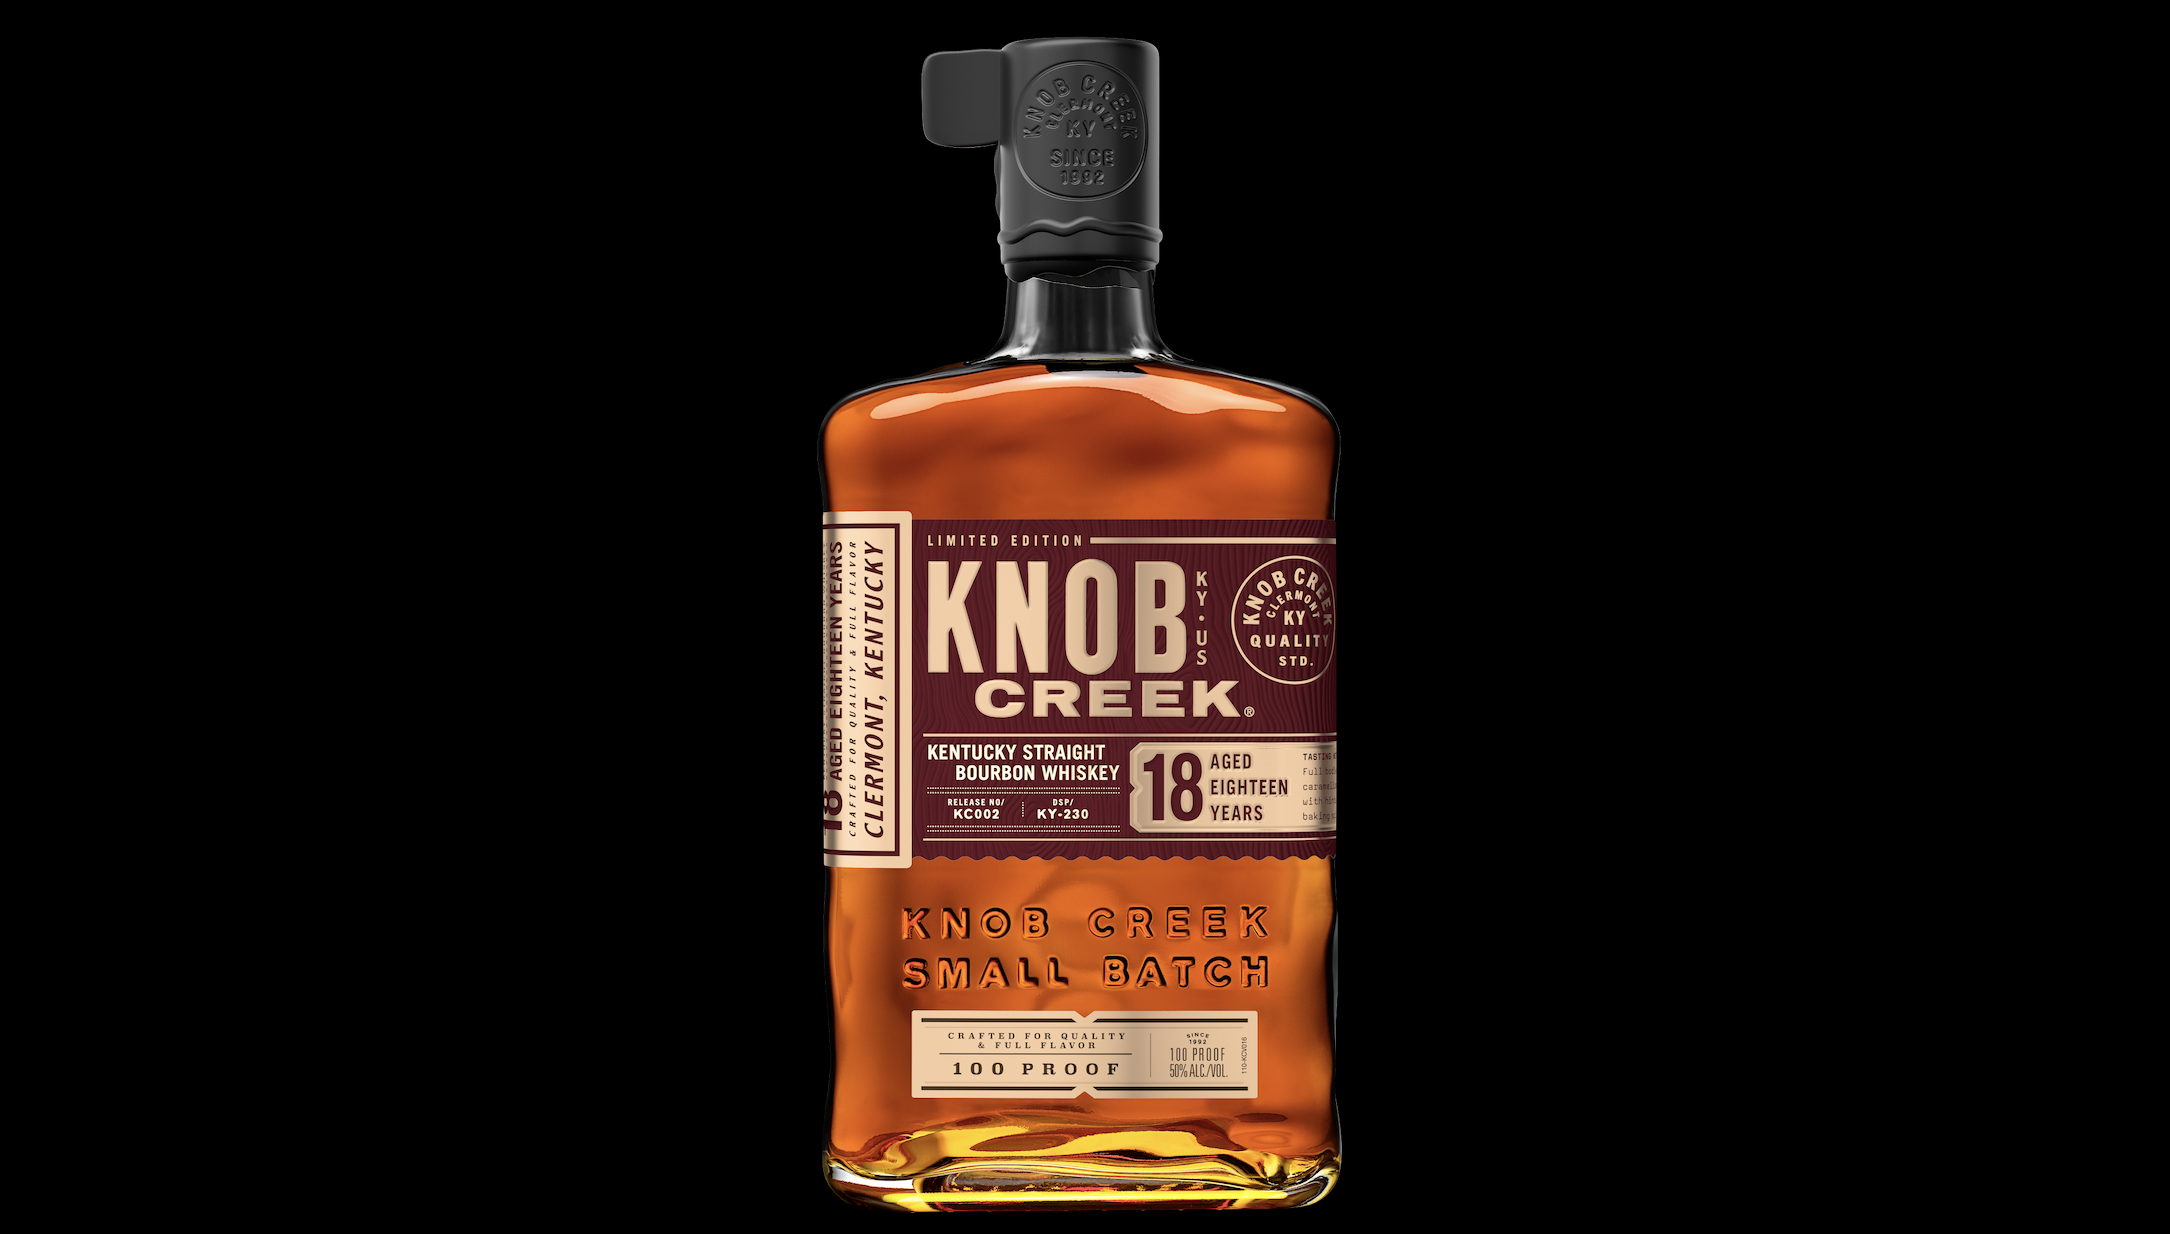 Knob Creek Small Batch Kentucky Straight Bourbon Whiskey Aged 18 Years